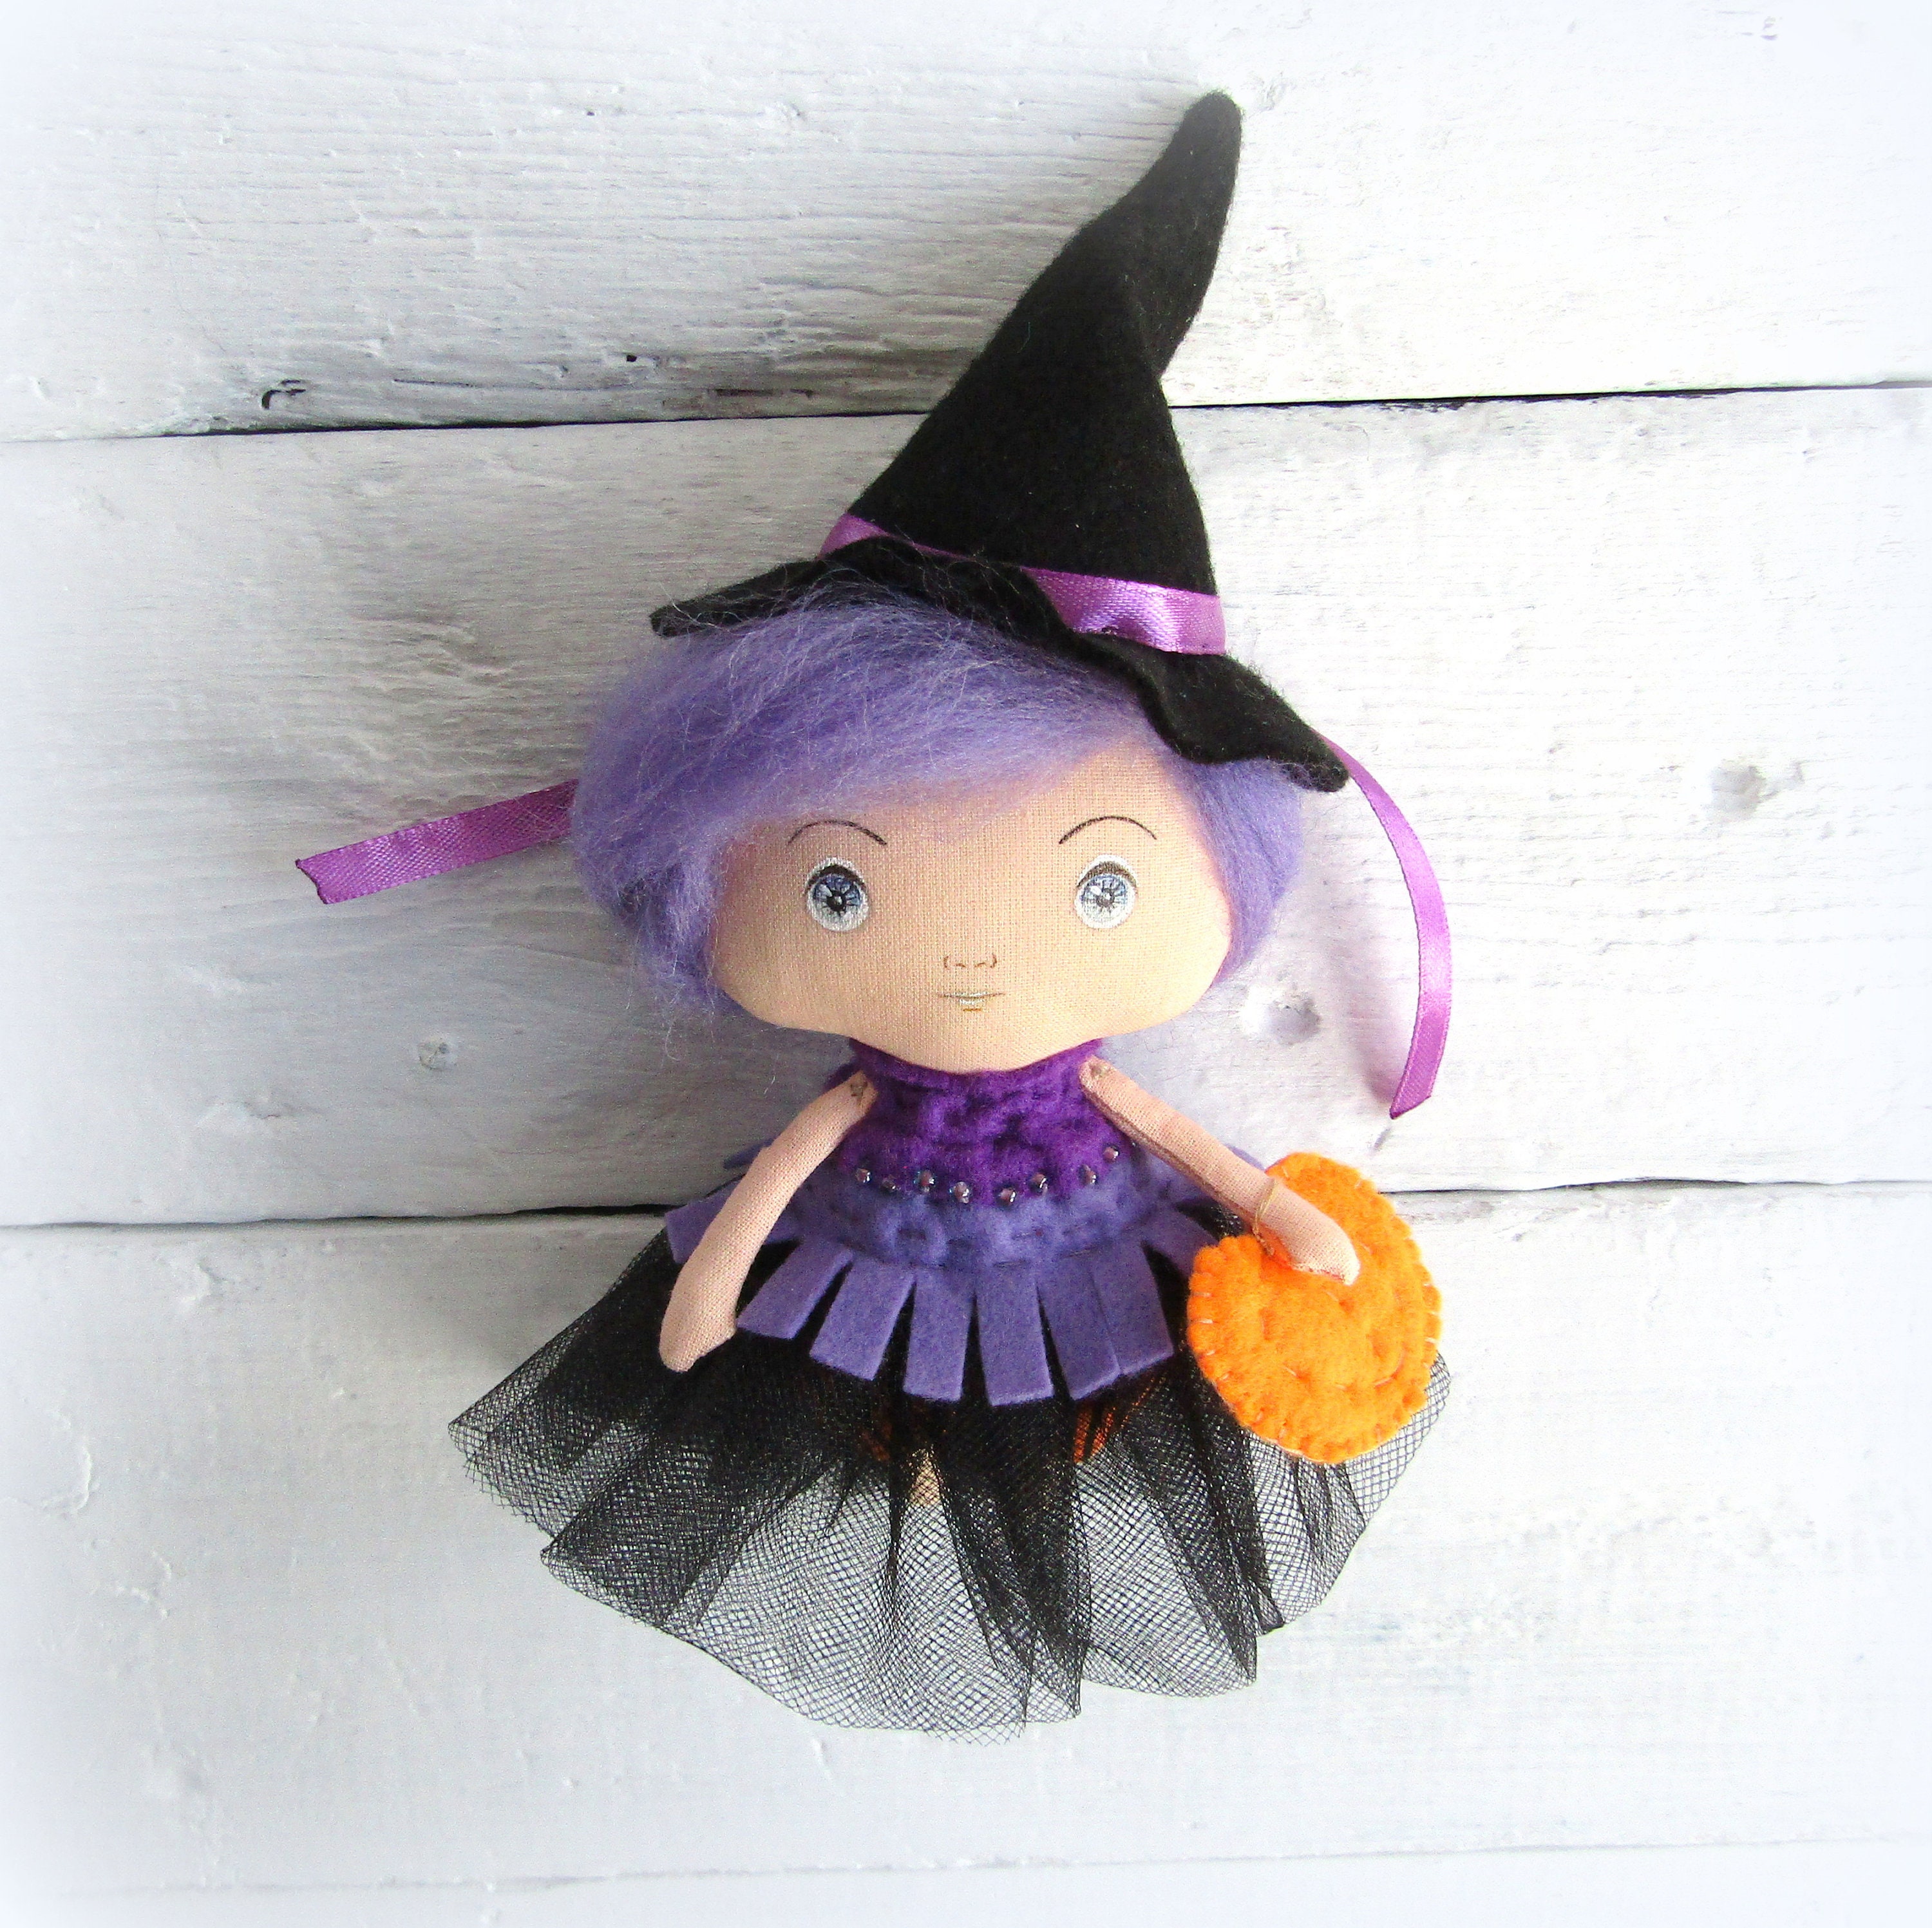 Kitchen witch doll Small cloth dolls handmade | Etsy